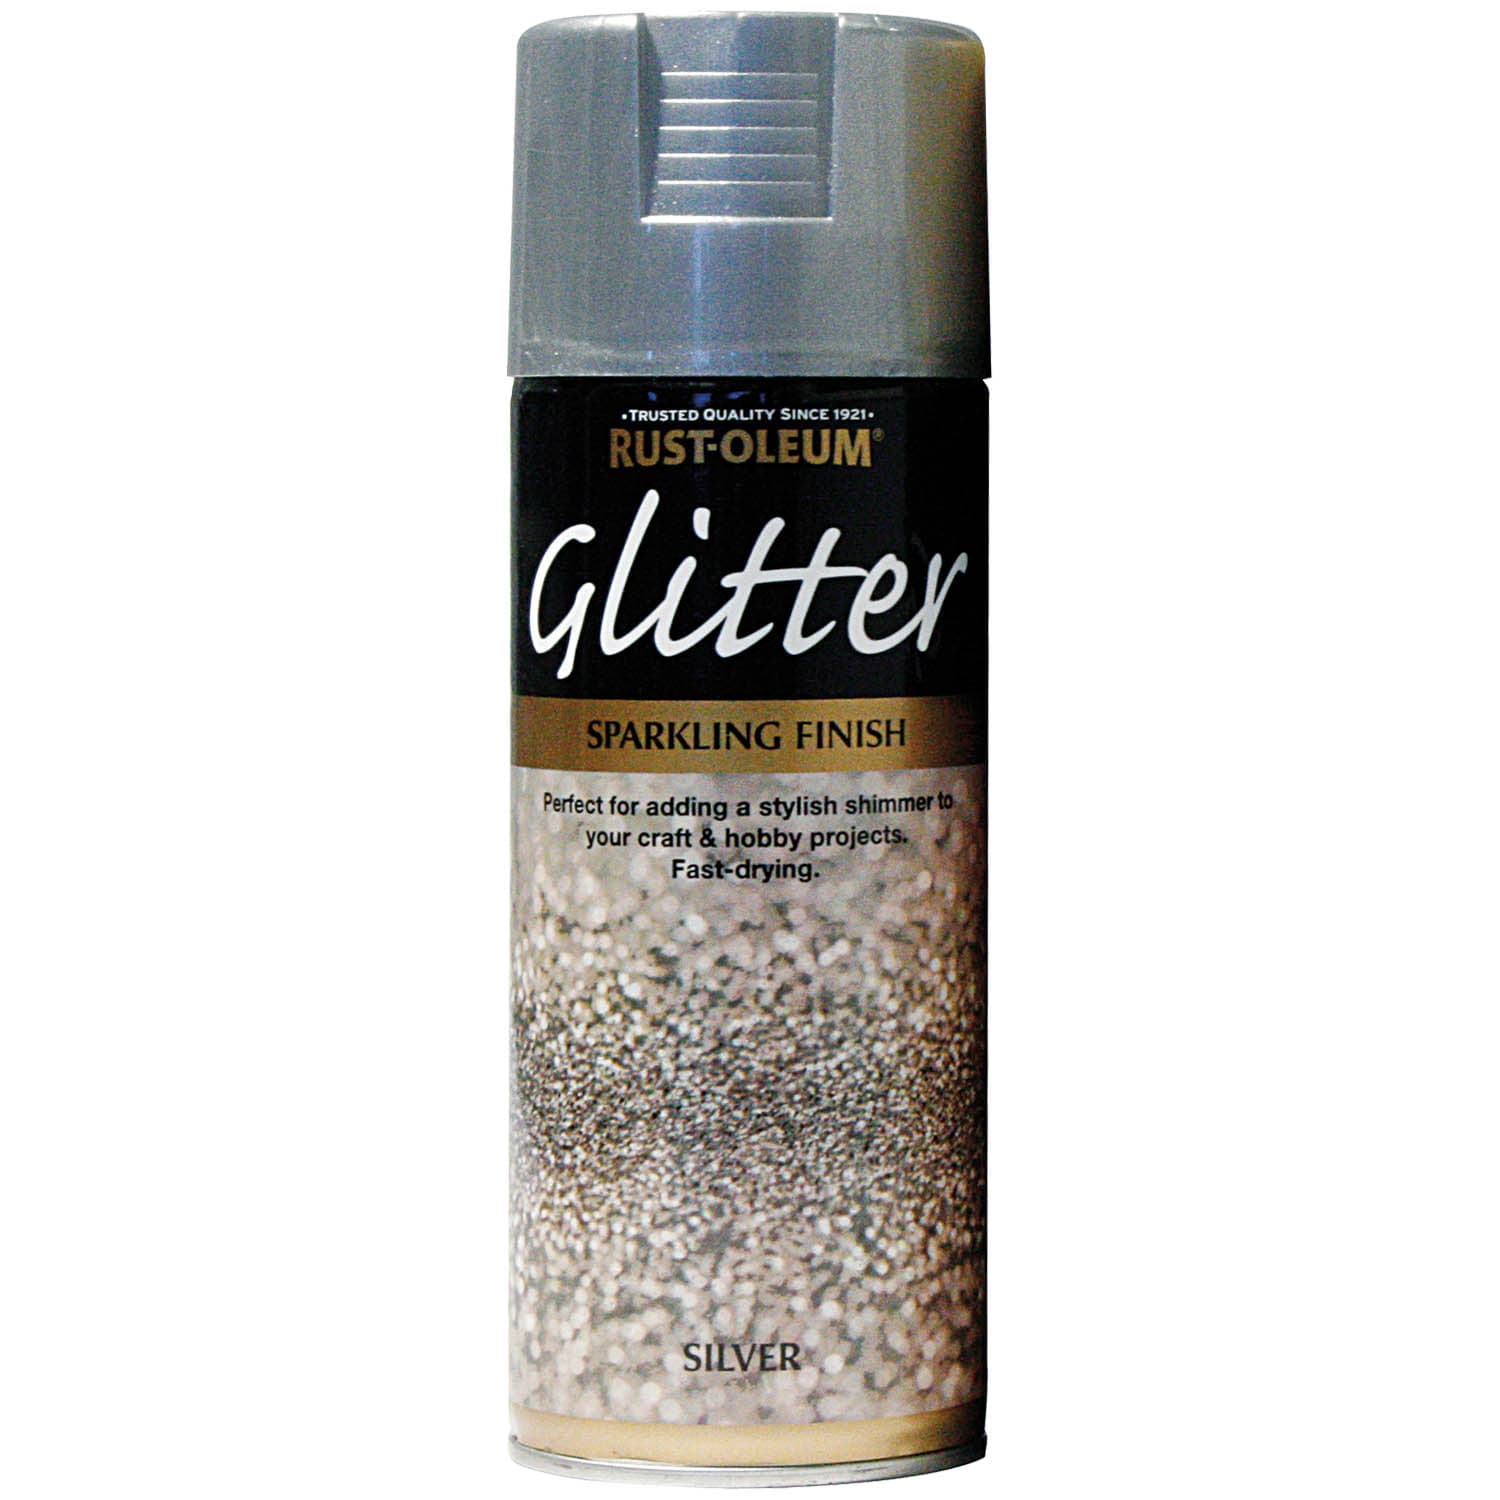 Glitter Spray Paint - The Craft Shop, Inc.